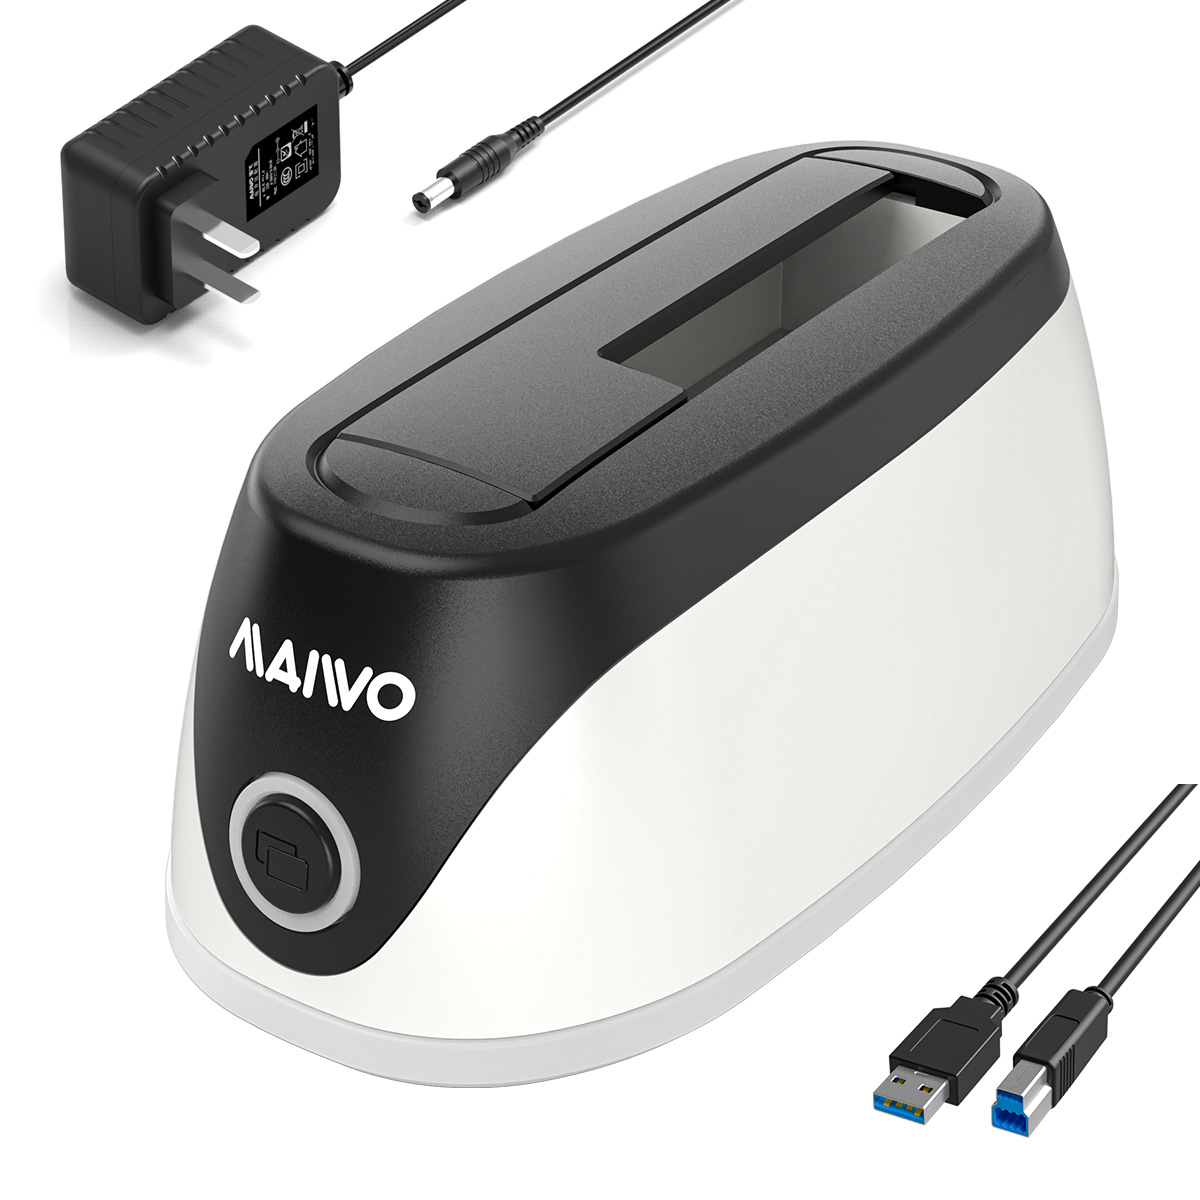 MAIWO K306A USB 3.0 to SATA Hard Drive Docking Station External Enclosure Adapter for 2.5 & 3.5 